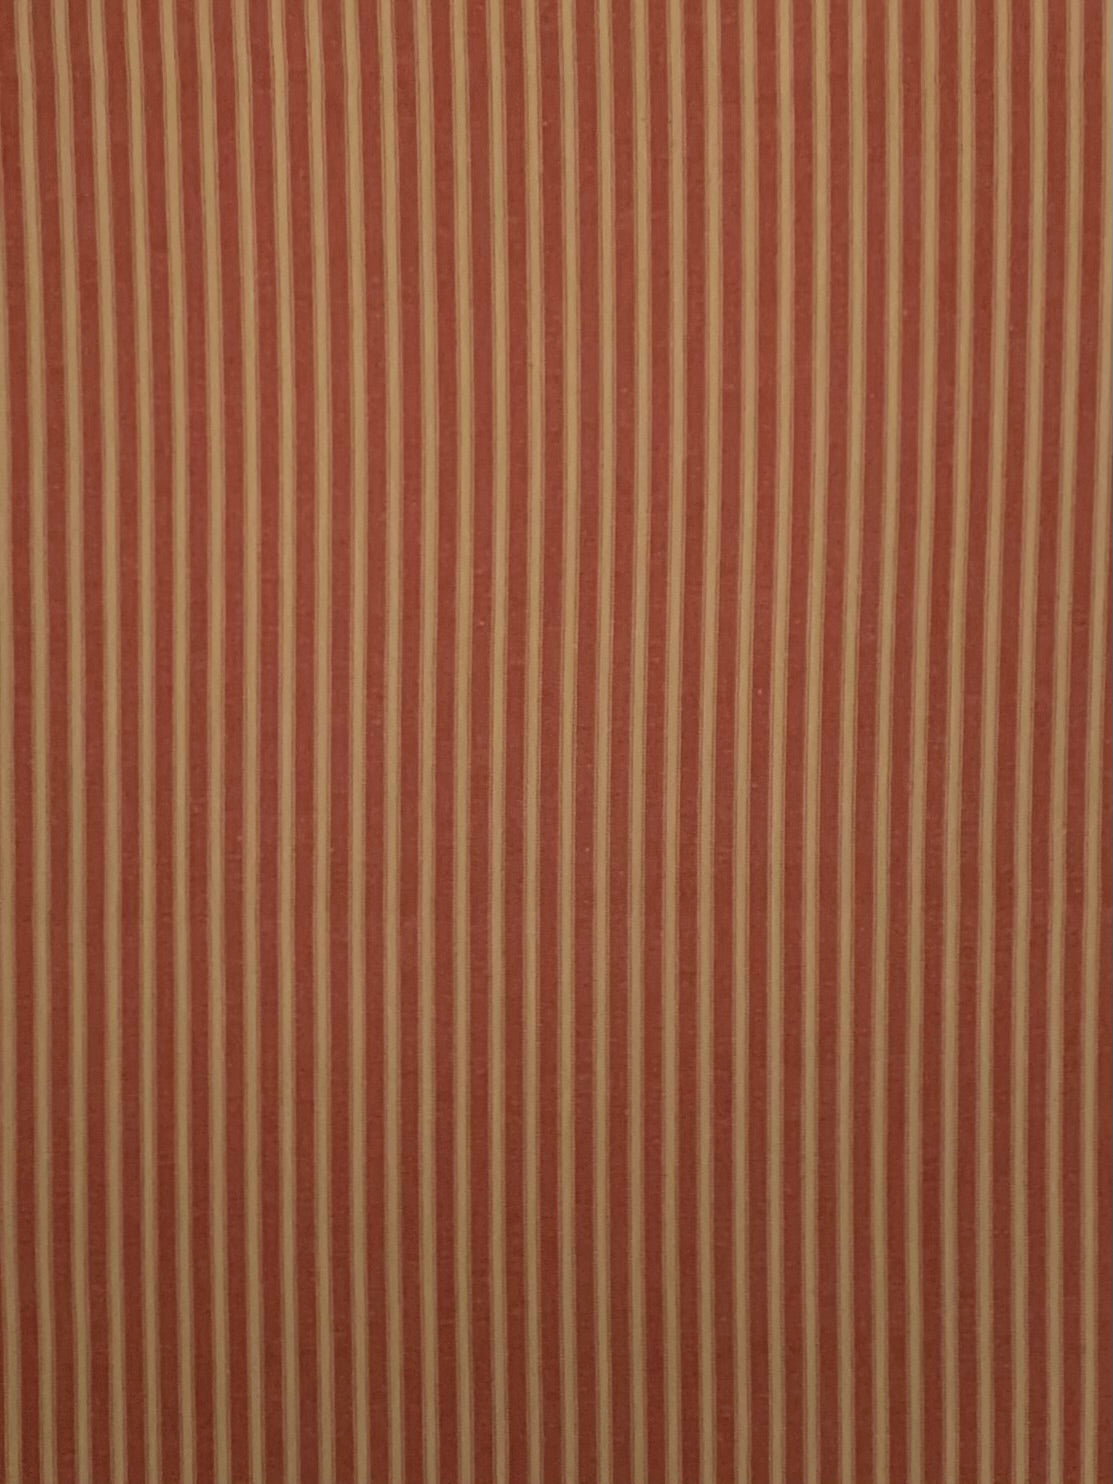 Brick Red and Beige Stripe 37s - Homespun Fabric